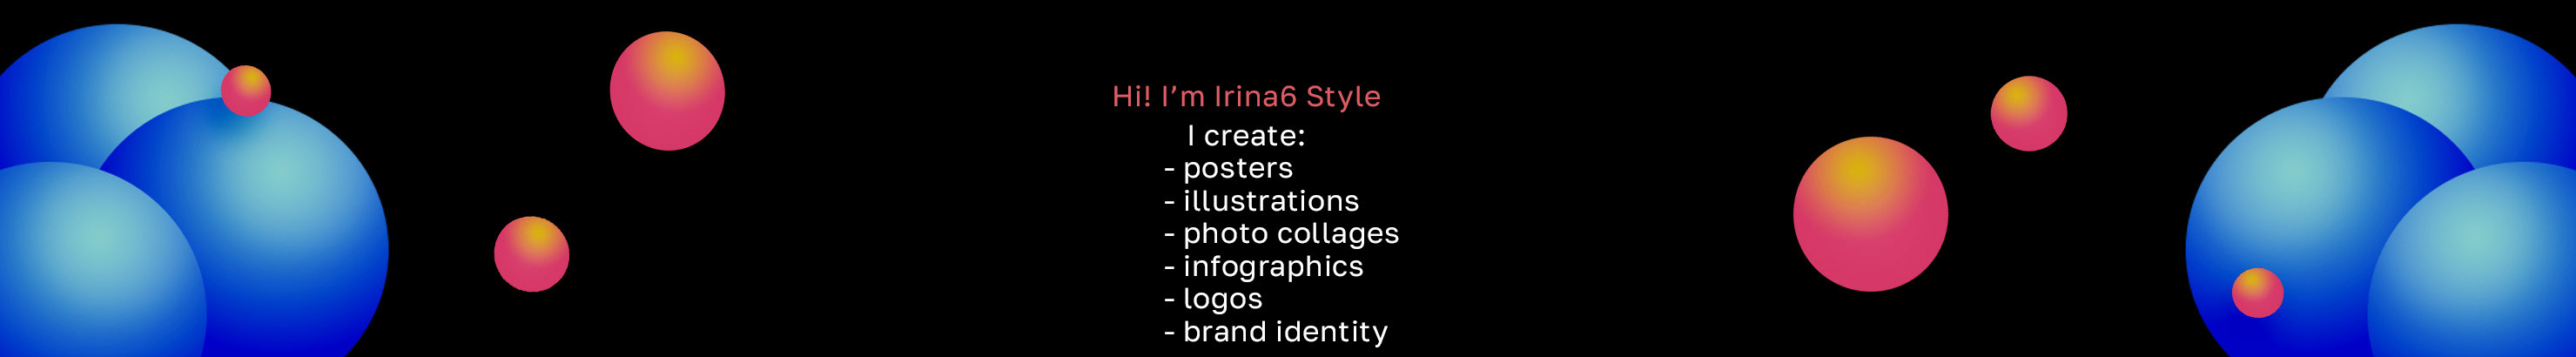 Irina6 Styles profilbanner